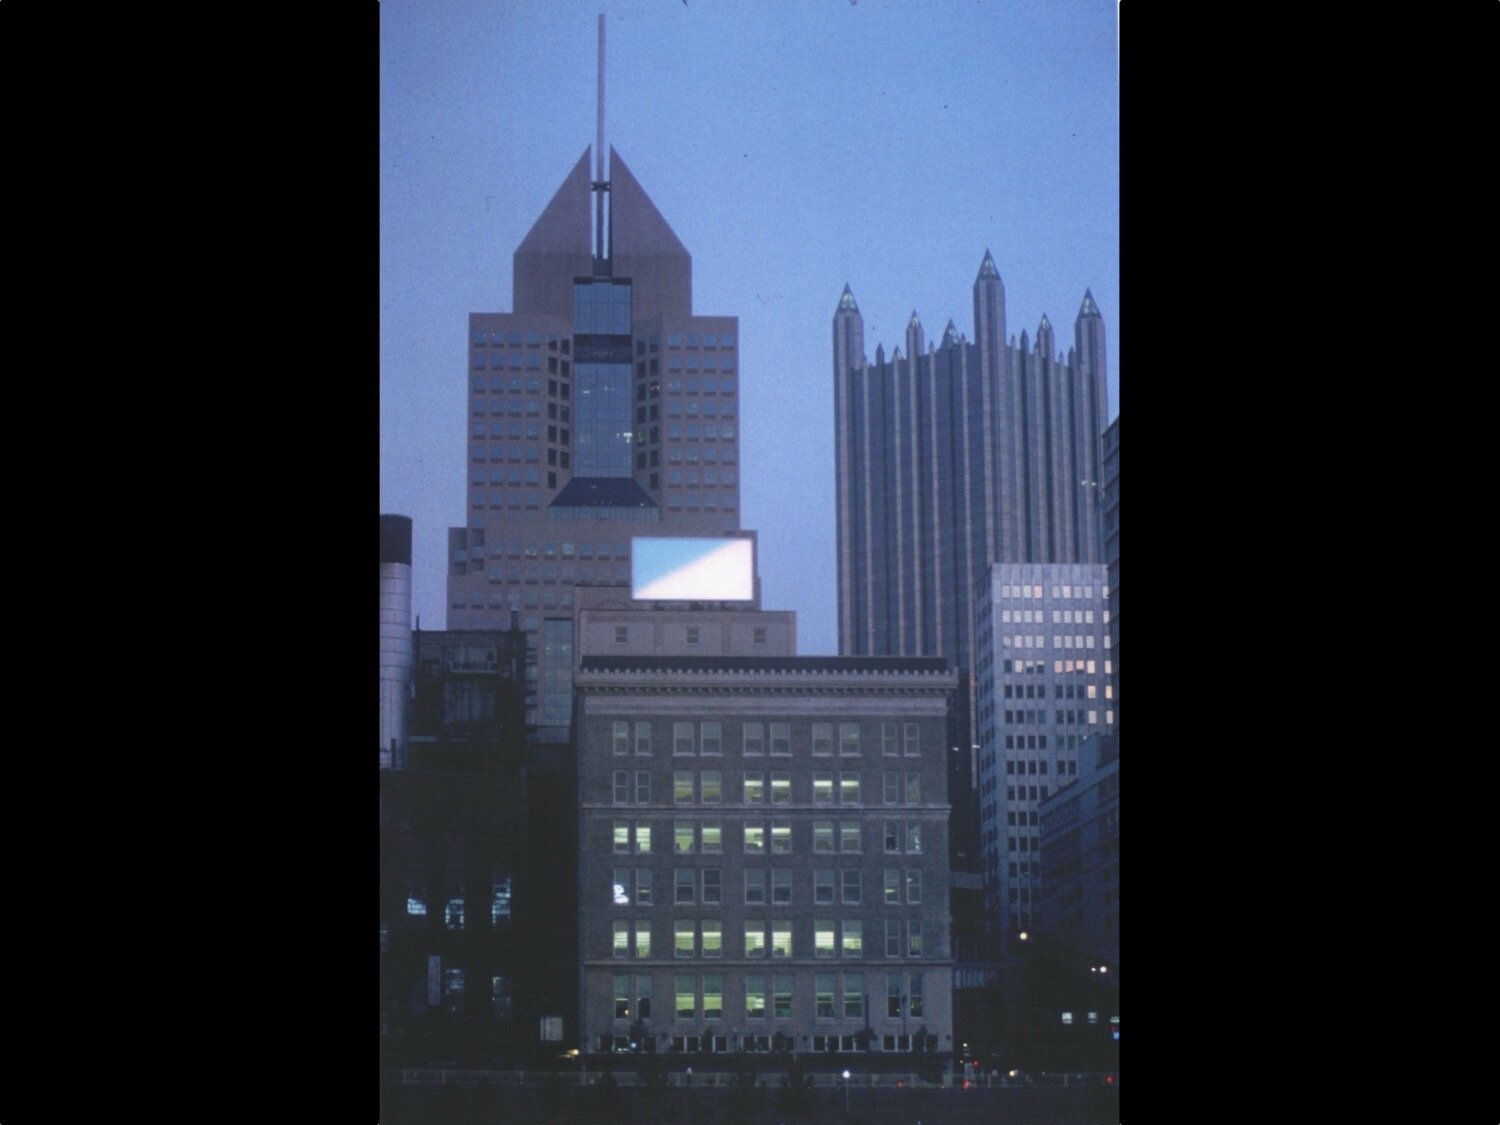  Billboard
the Skyline, Pittsburgh, 2001
(photo courtesy of Gluckman Mayner Architects) 